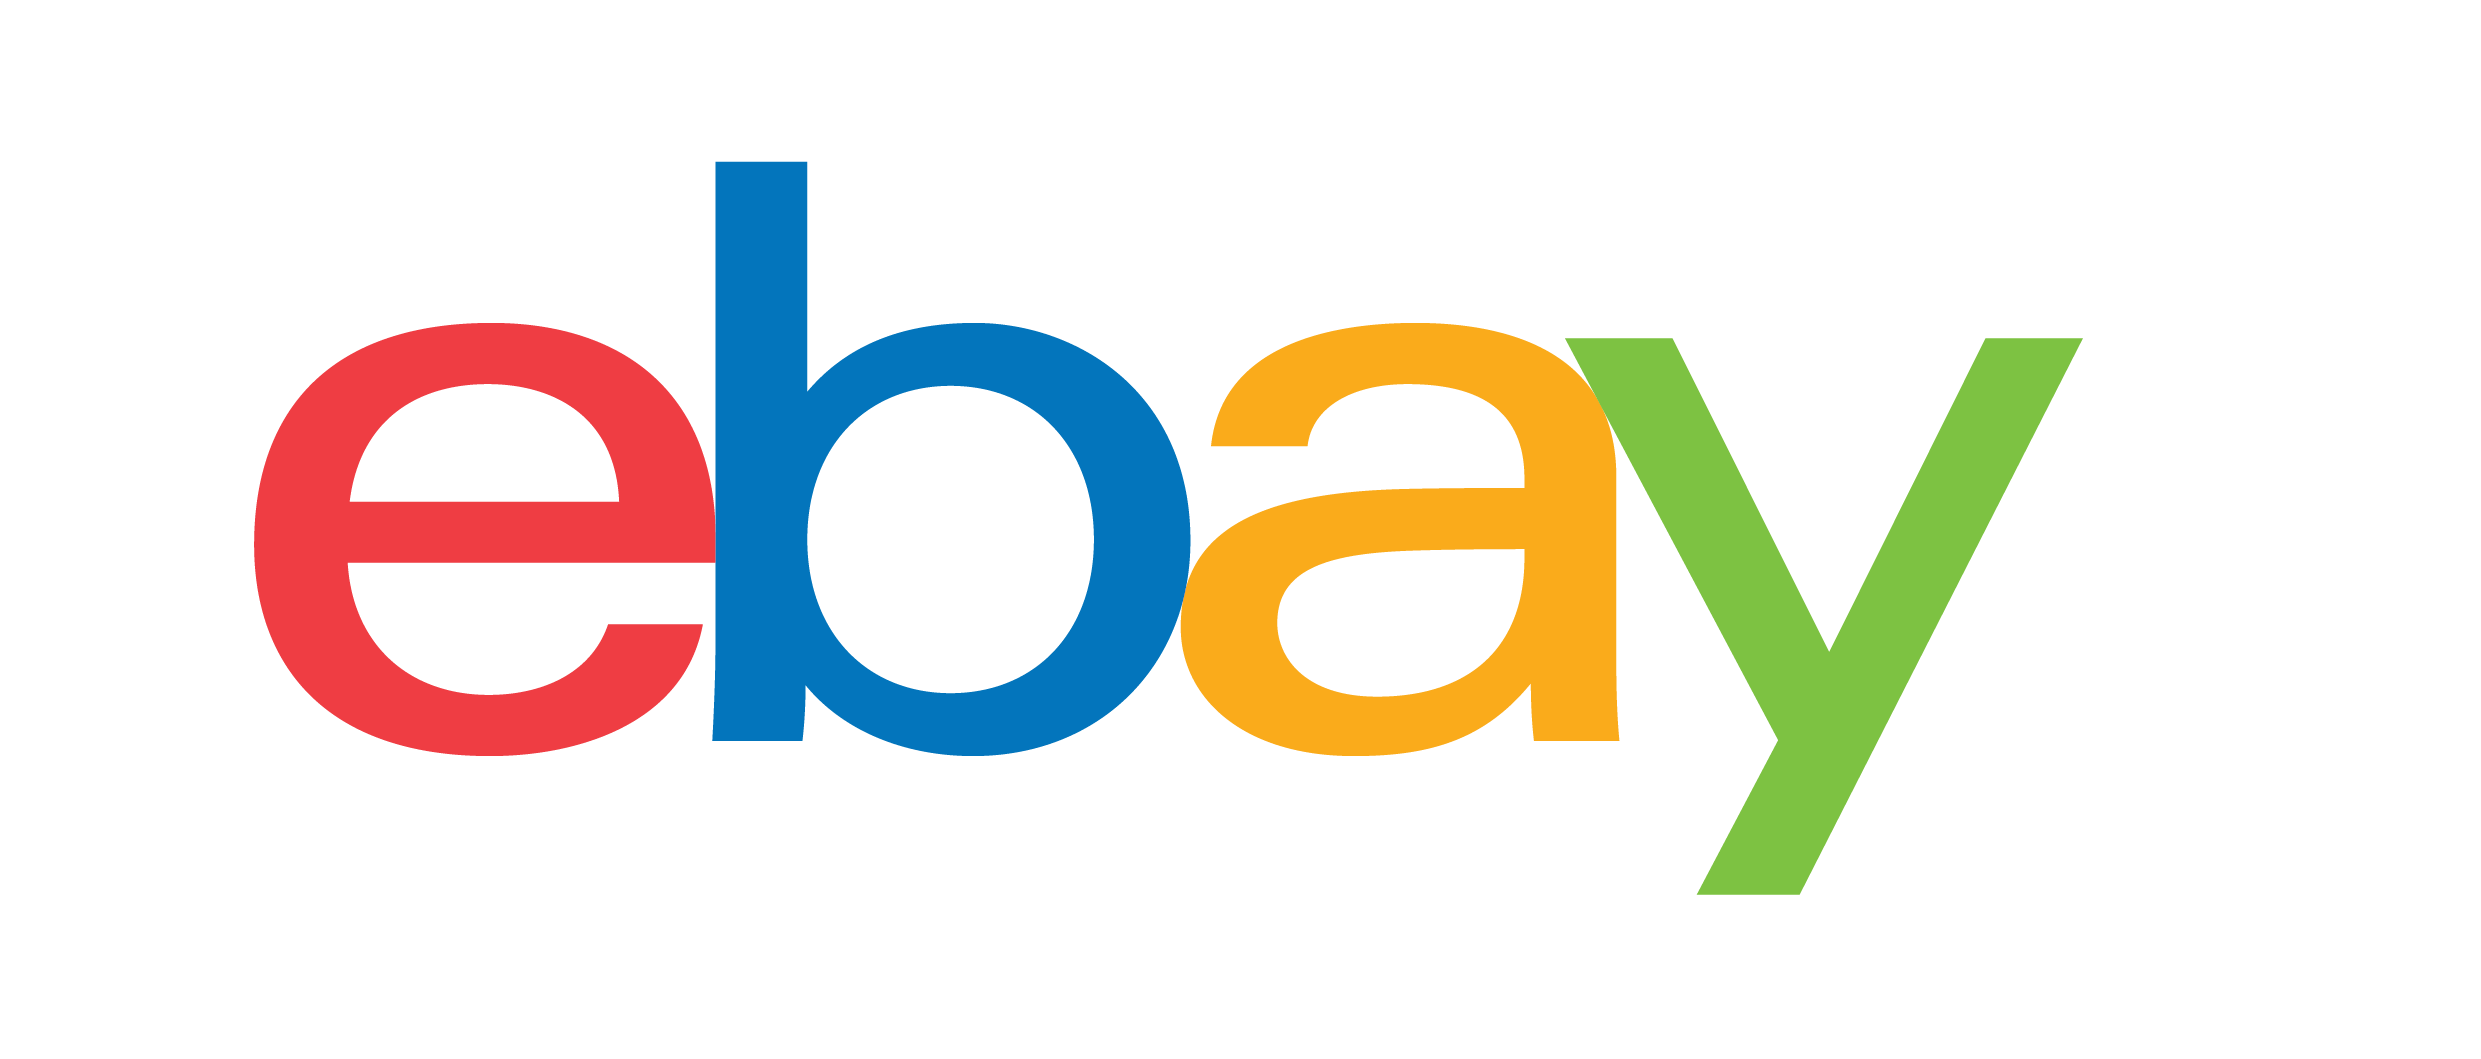 eBay 로고